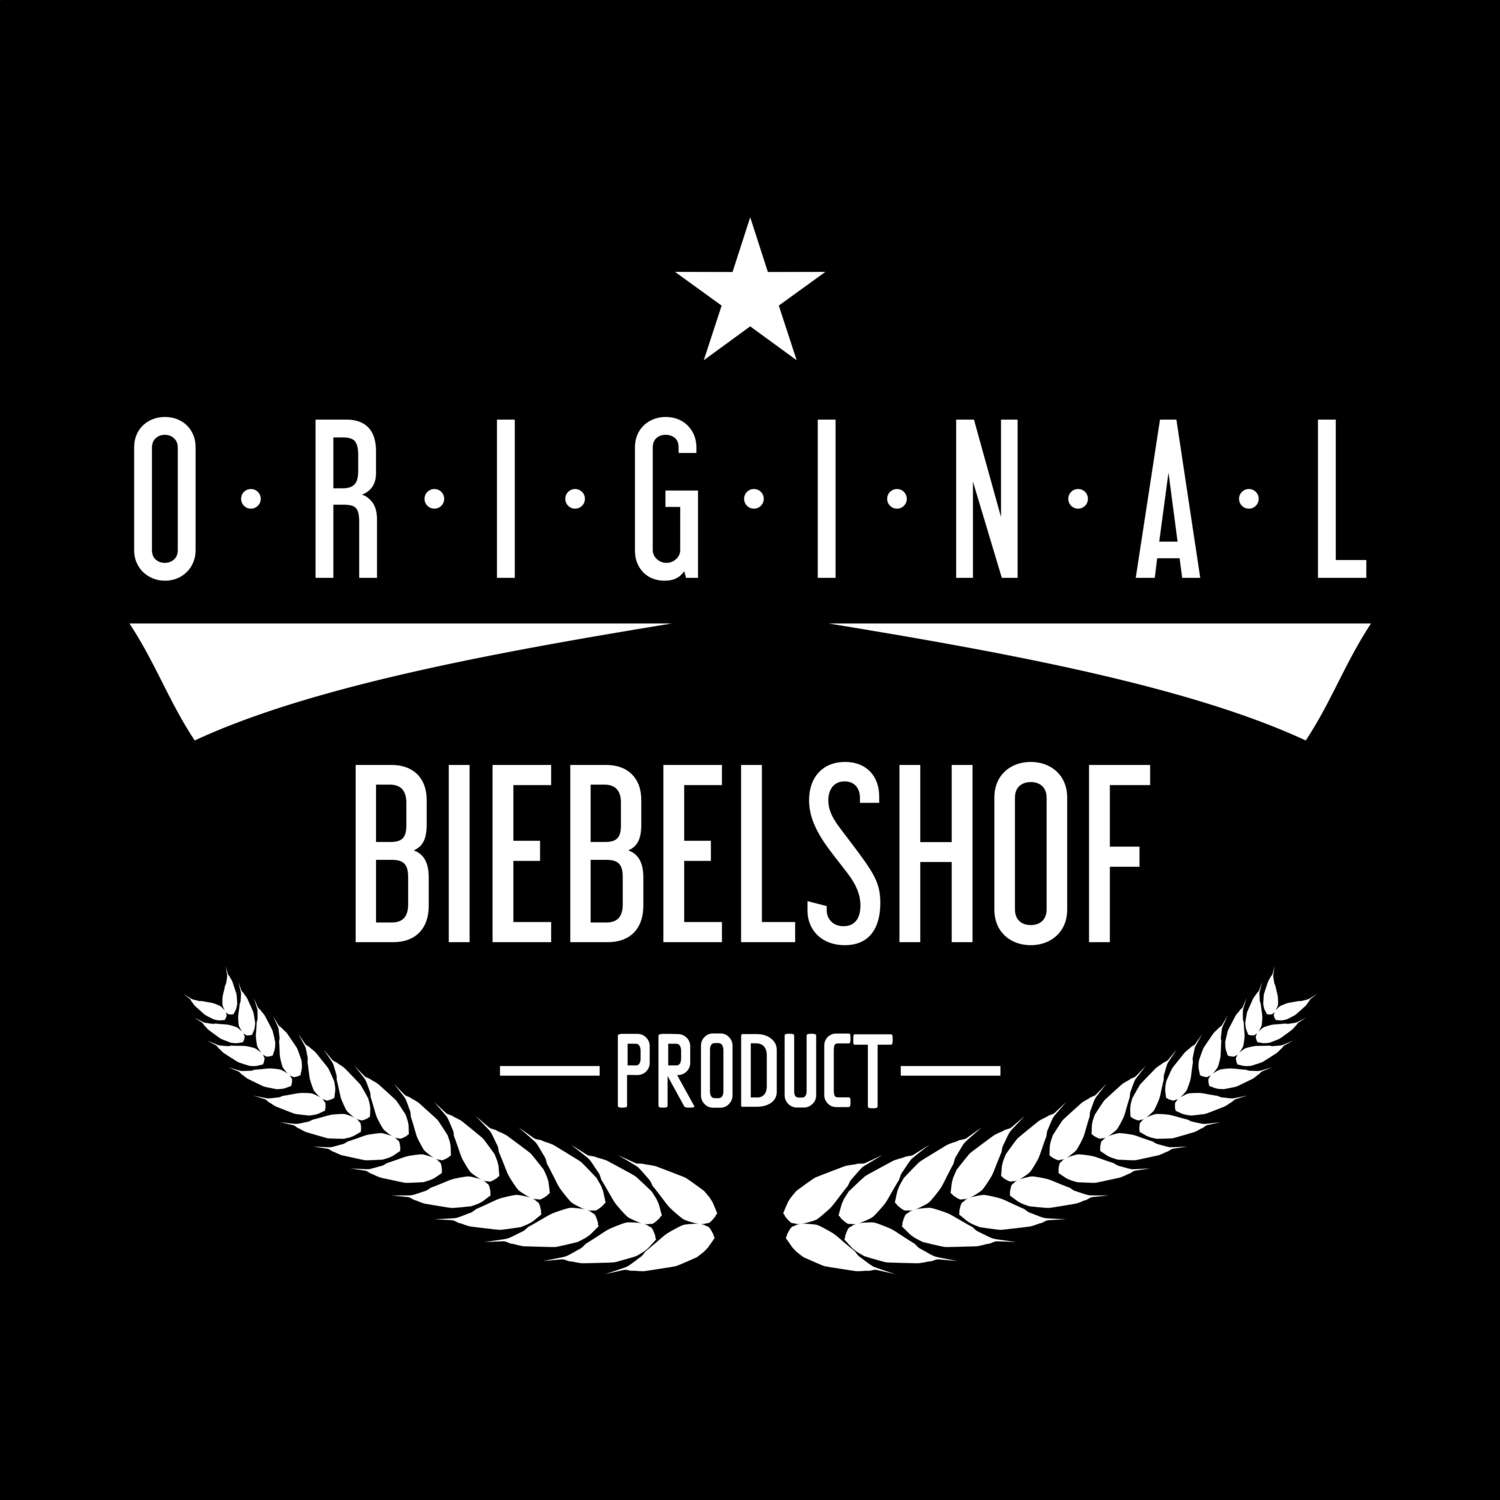 Biebelshof T-Shirt »Original Product«